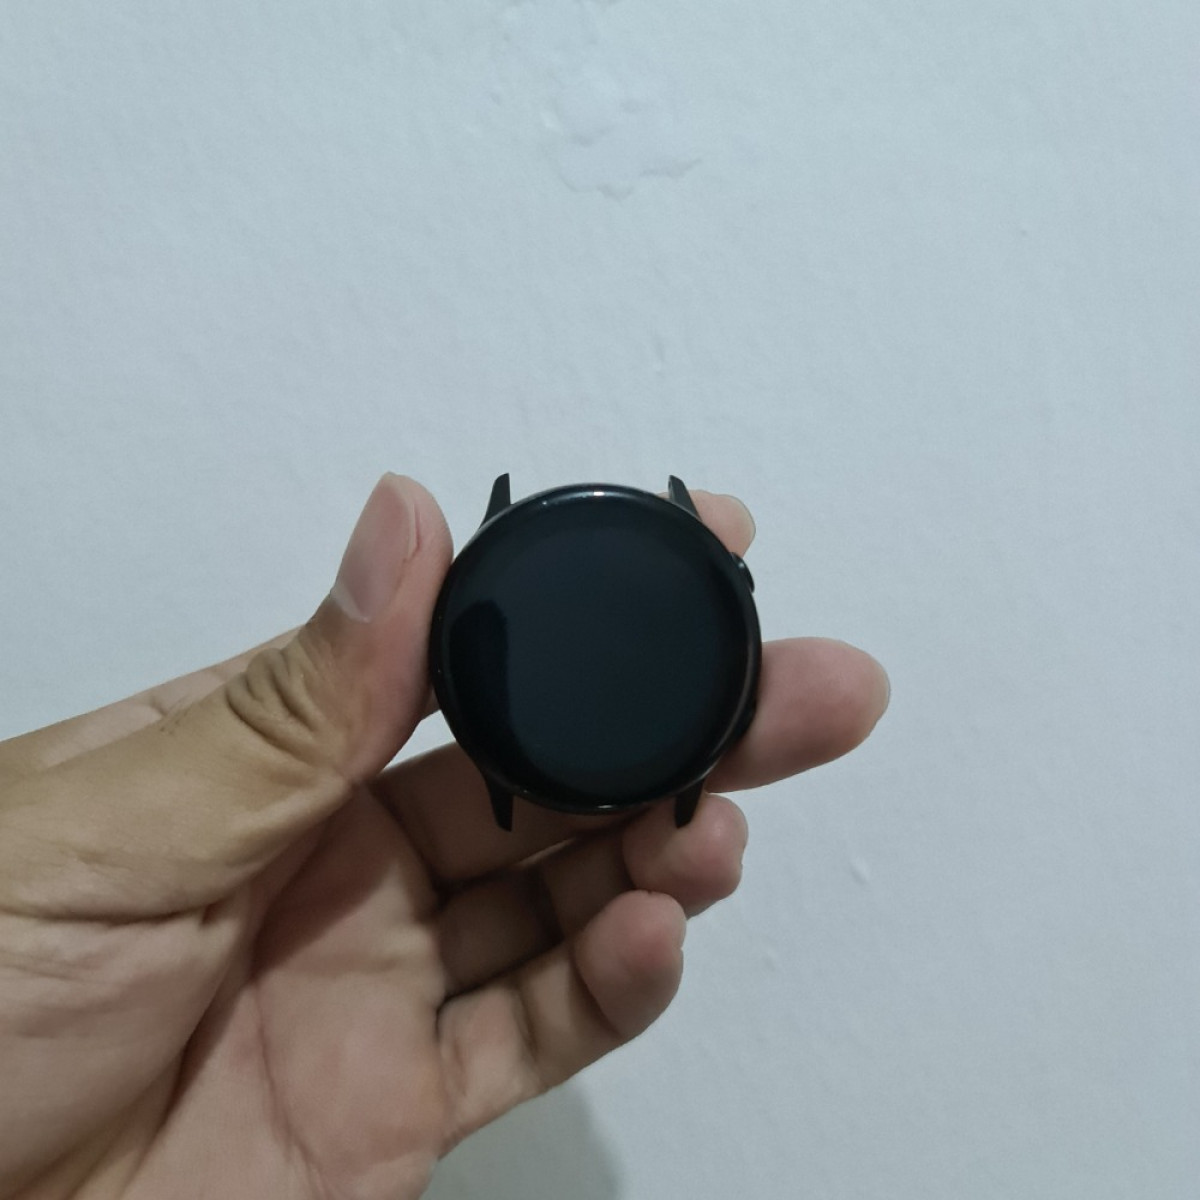 Samsung Galaxy Watch Active 40mm Black SM-R500 Jam Tangan Smart